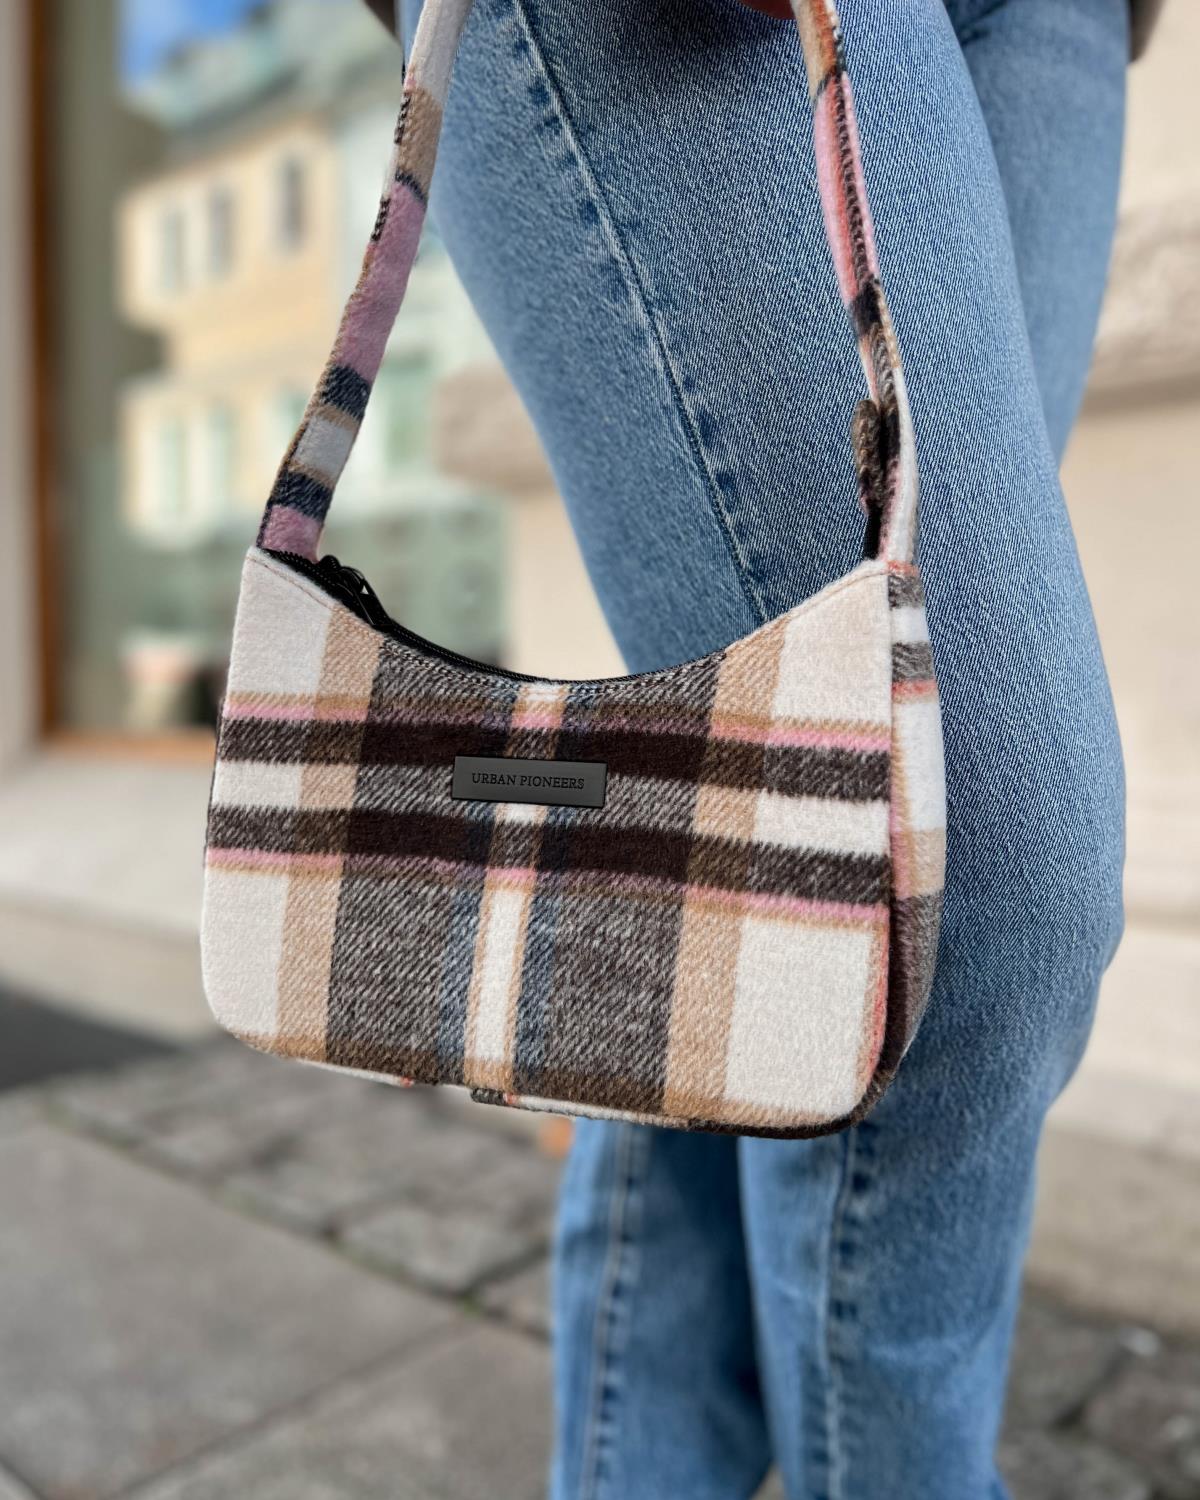 Vienna Handbag Pink Check - Urban Pioneers